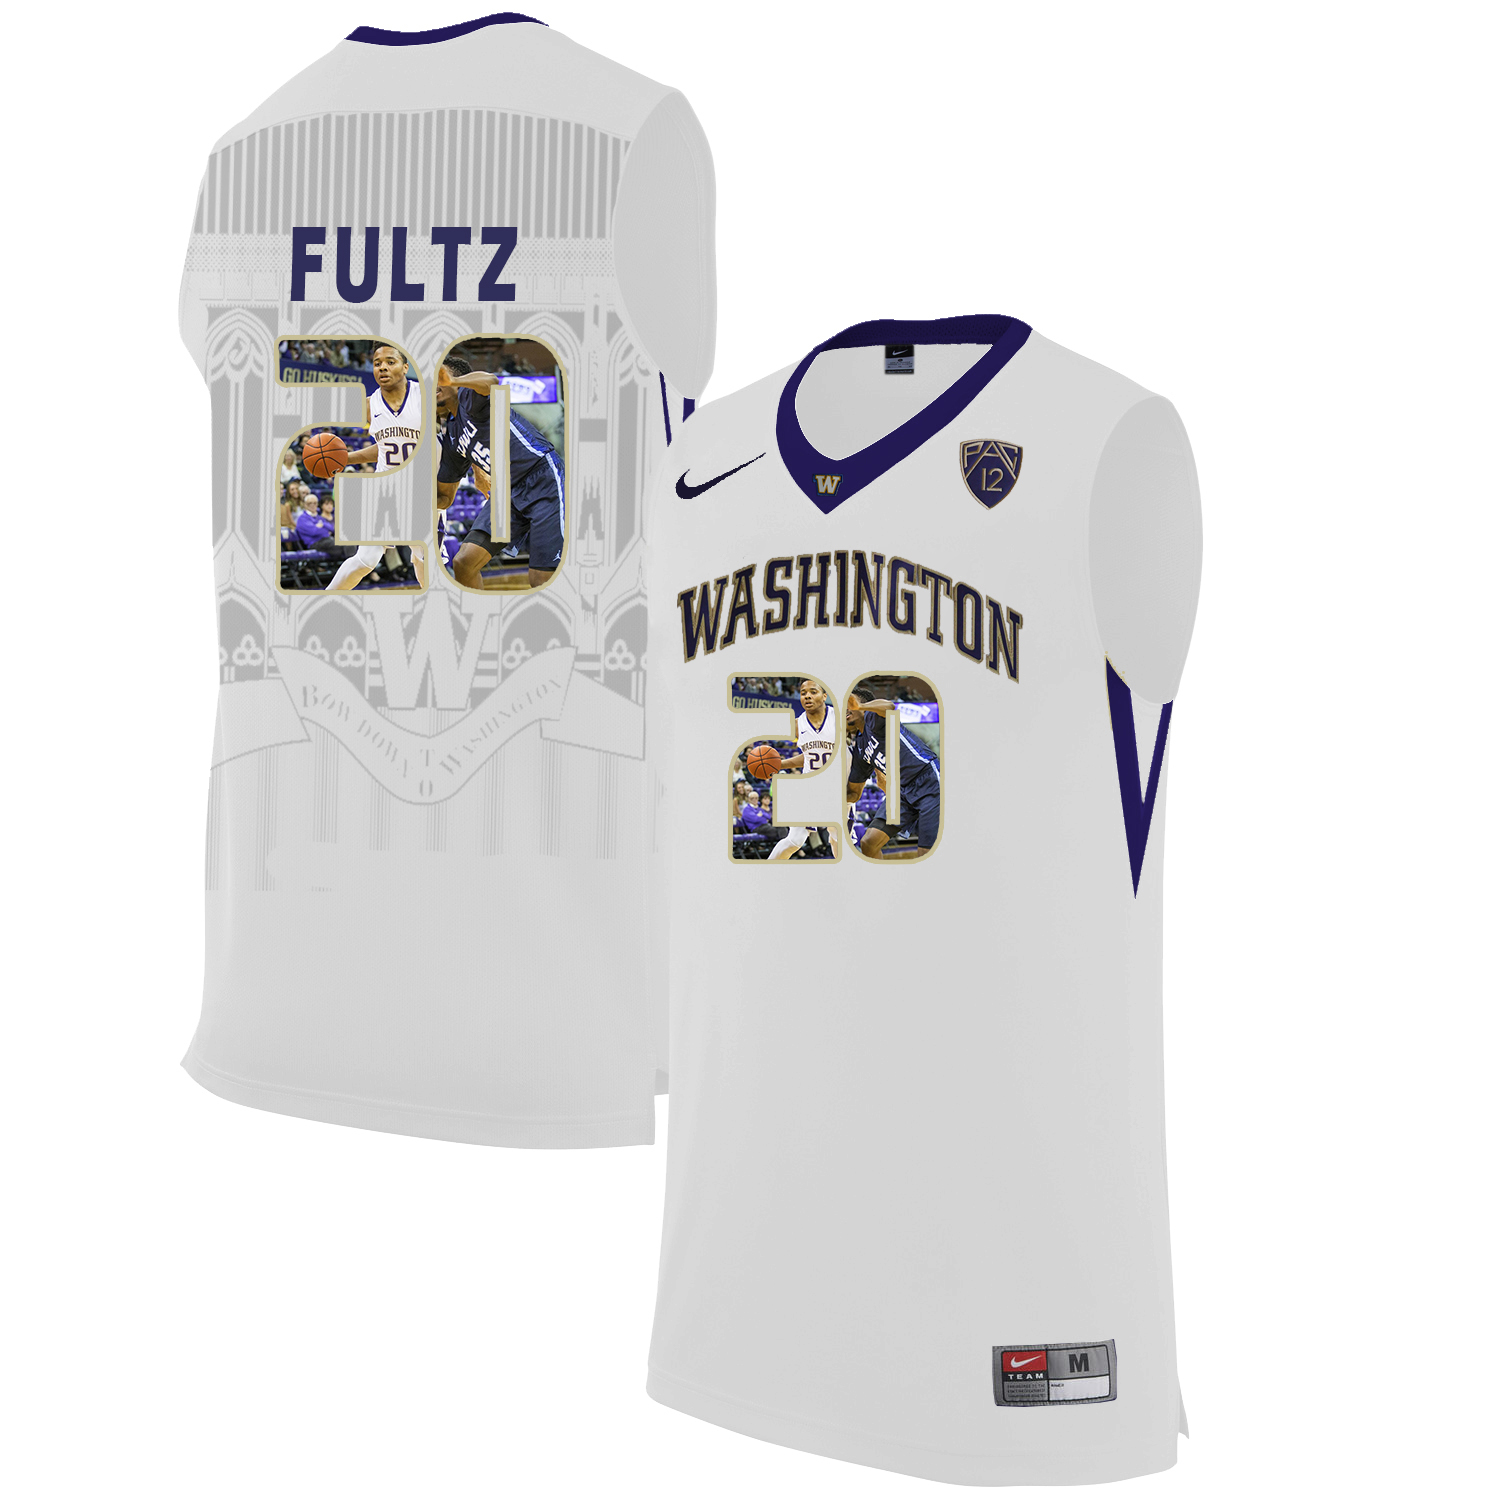 Washington Huskies 20 Markelle Fultz White With Portait College Basketball Jersey